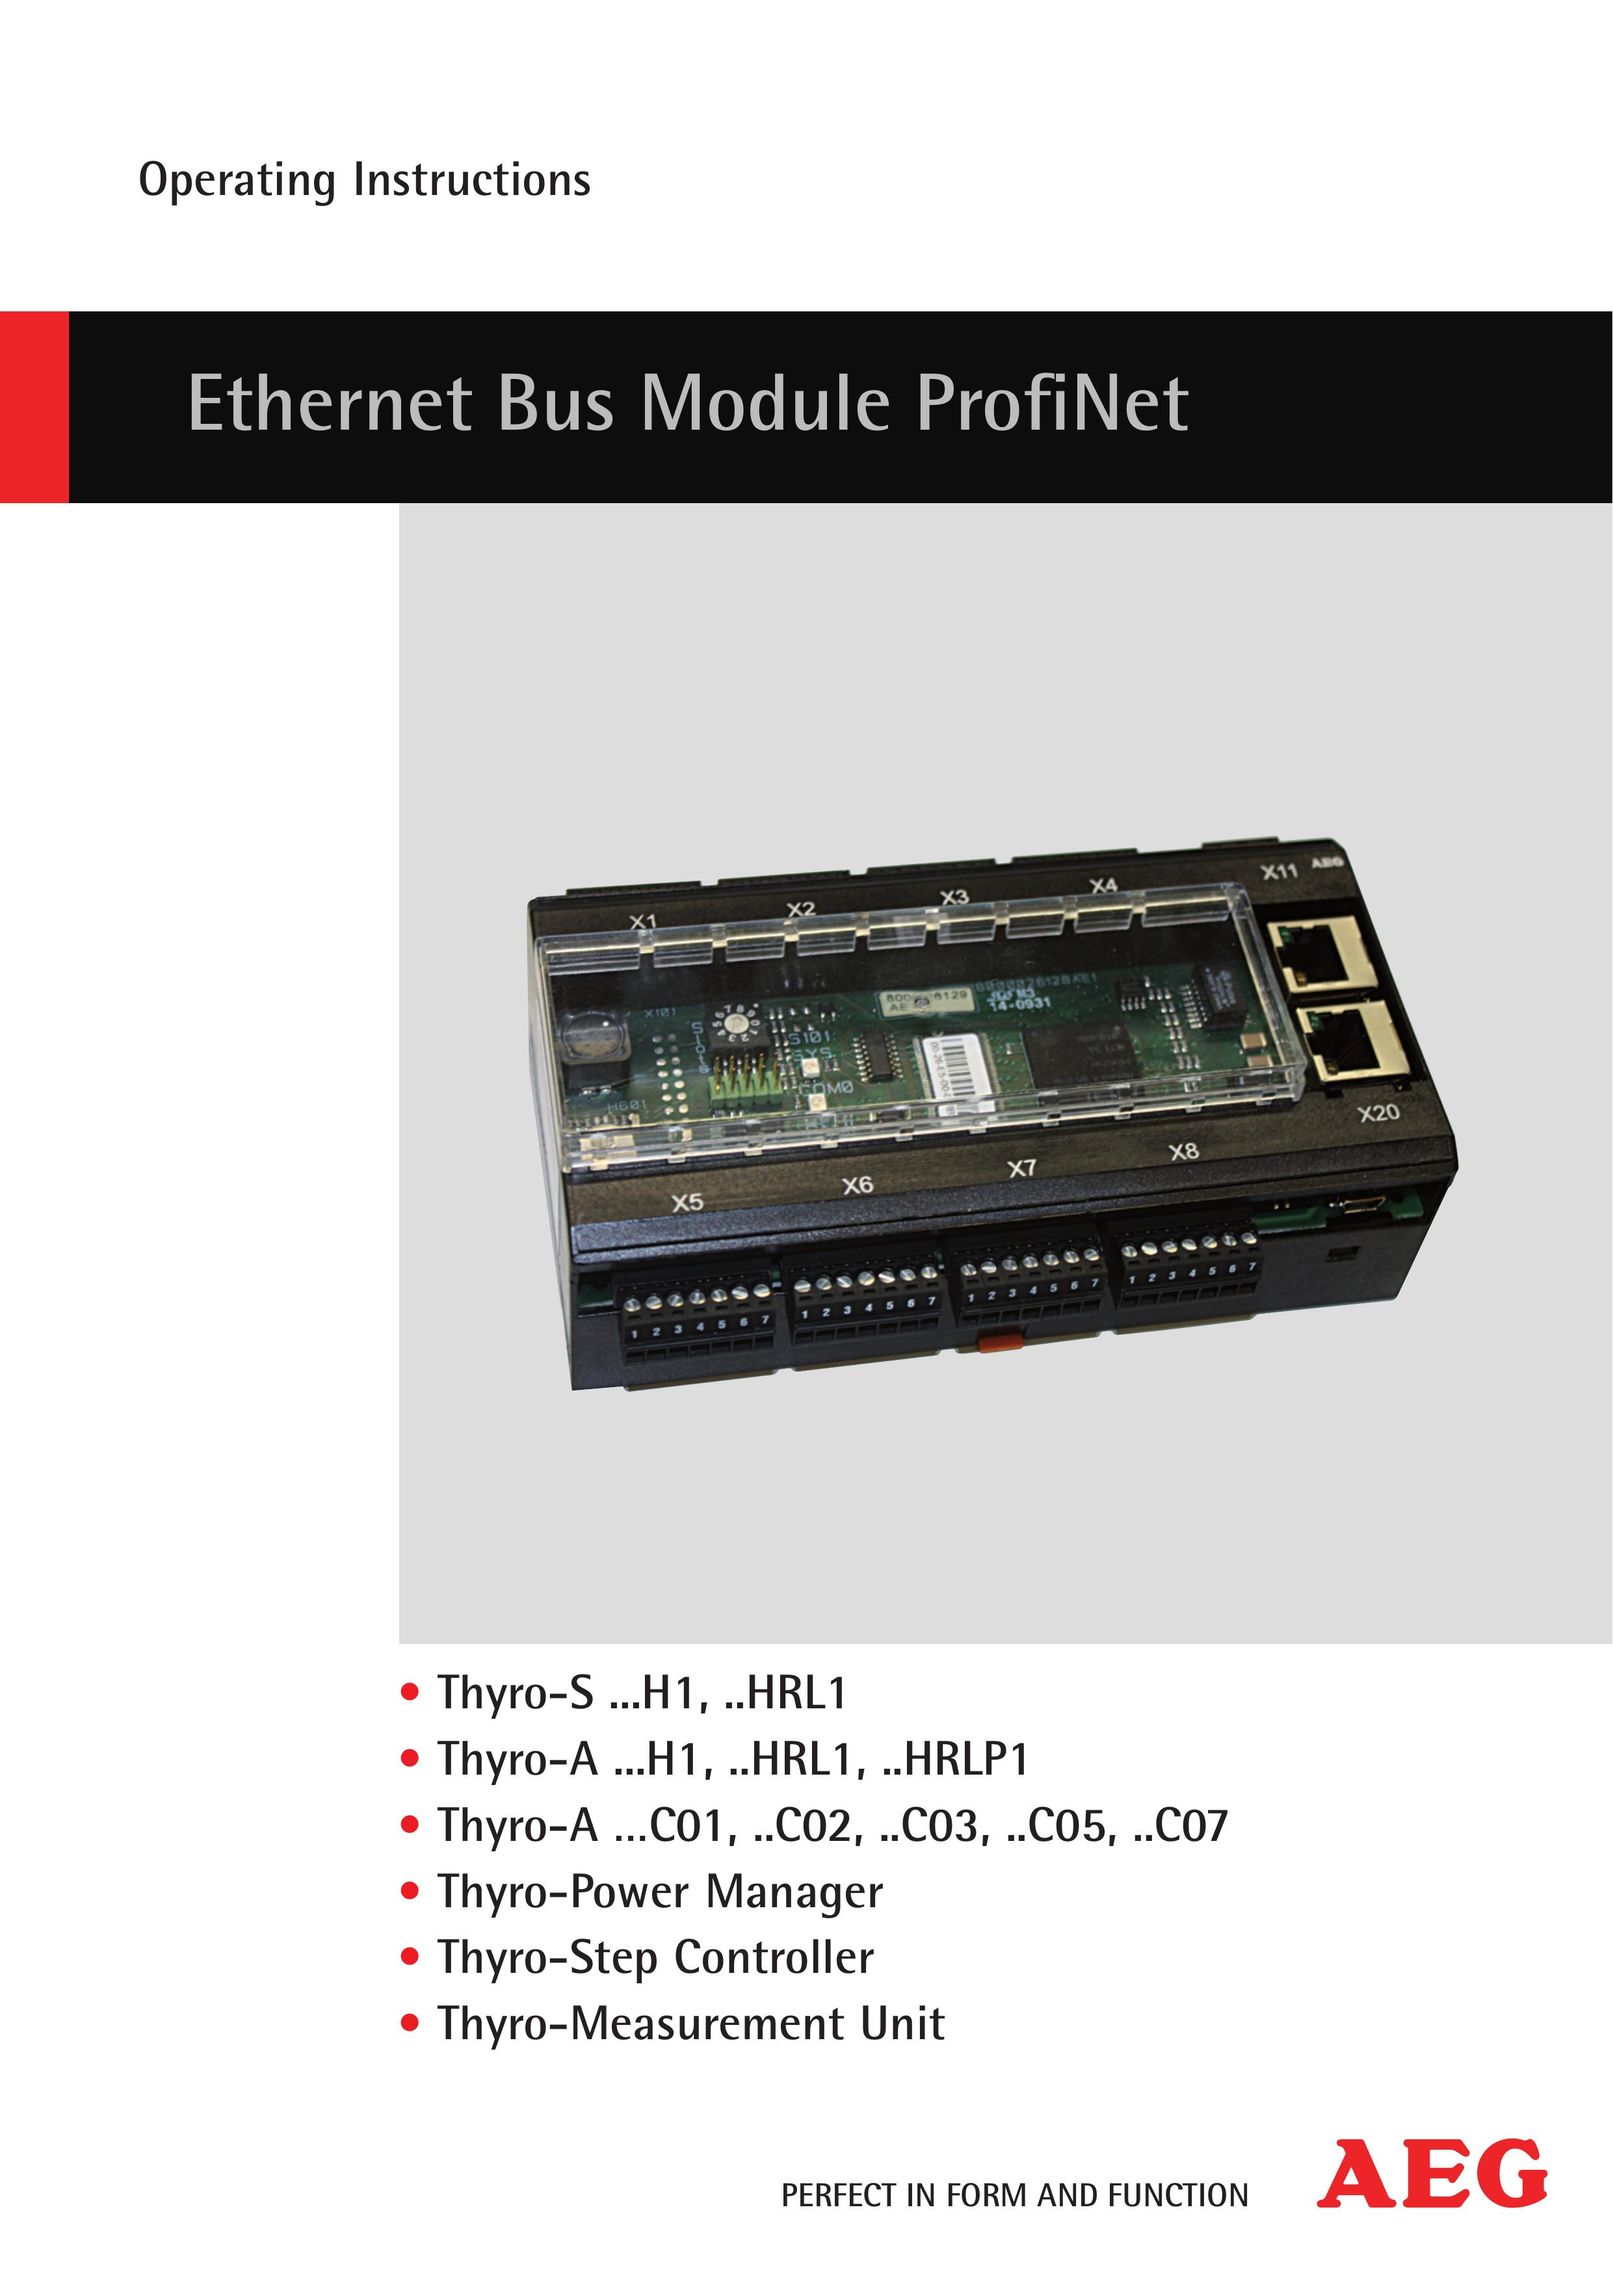 AEG Thyro-S H1 Network Card User Manual